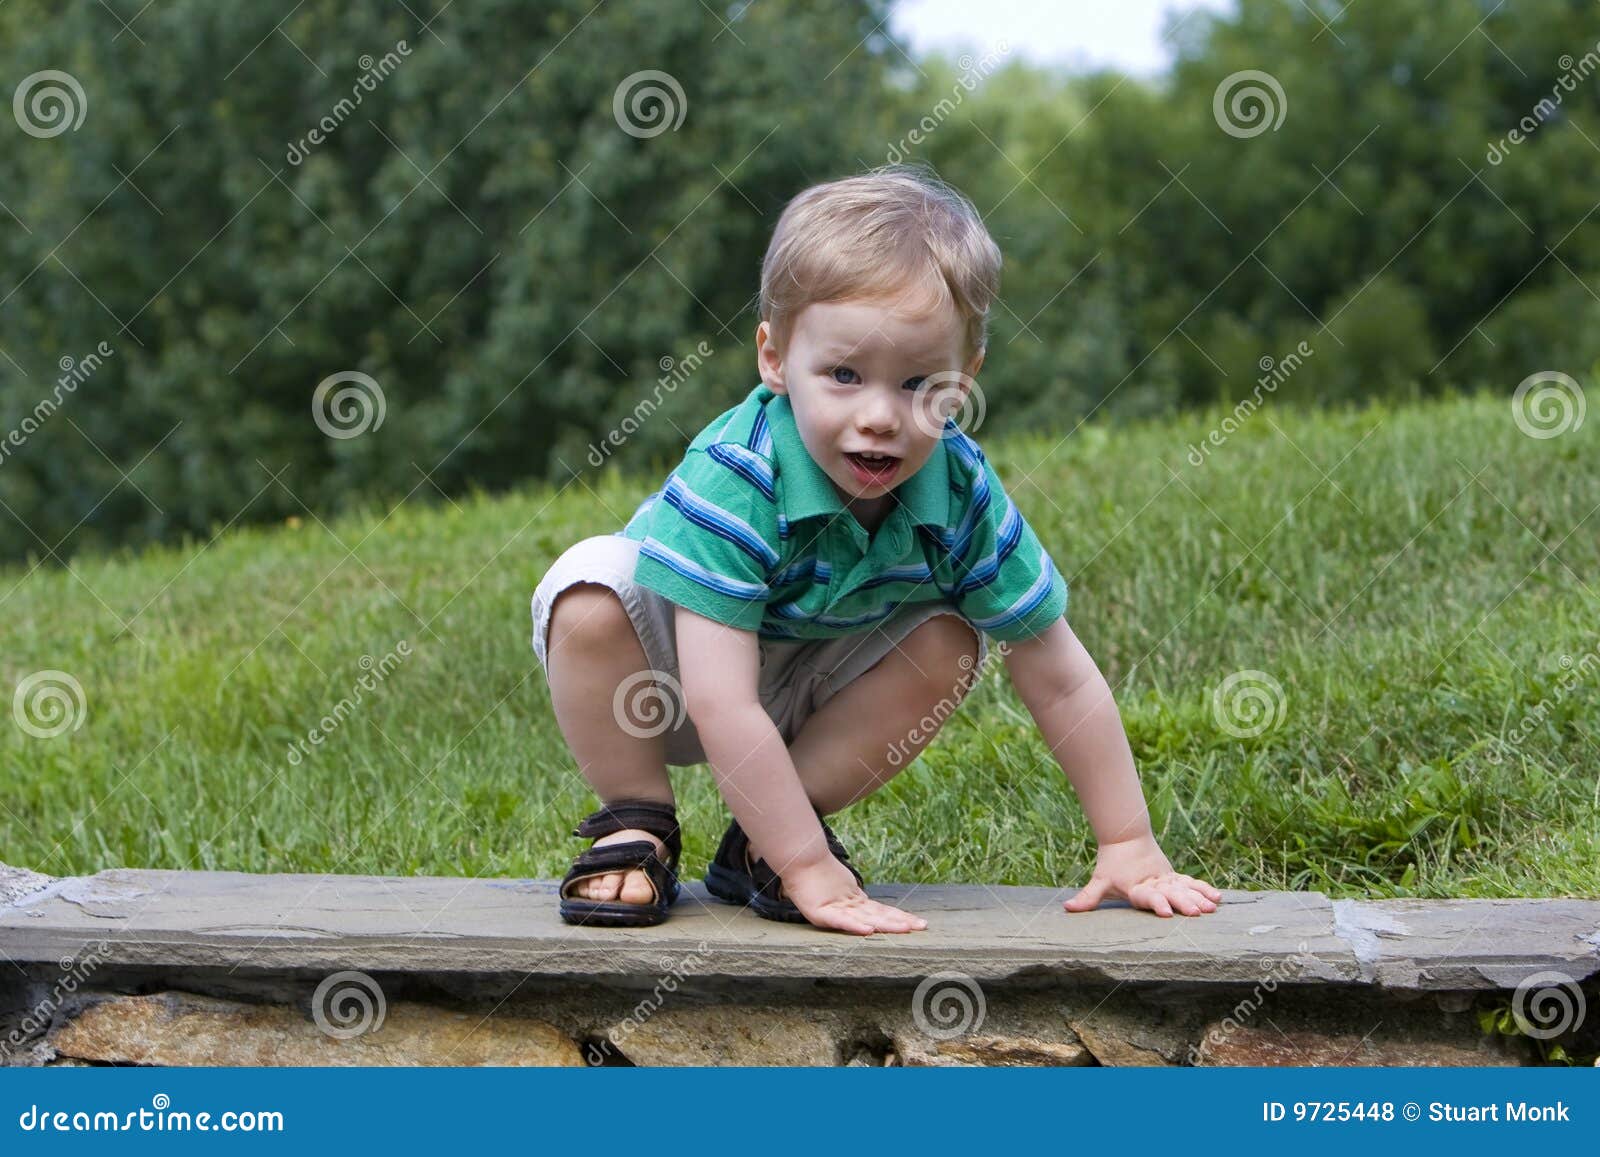 Worried boy on wall. Worried young boy climbing down rock wall